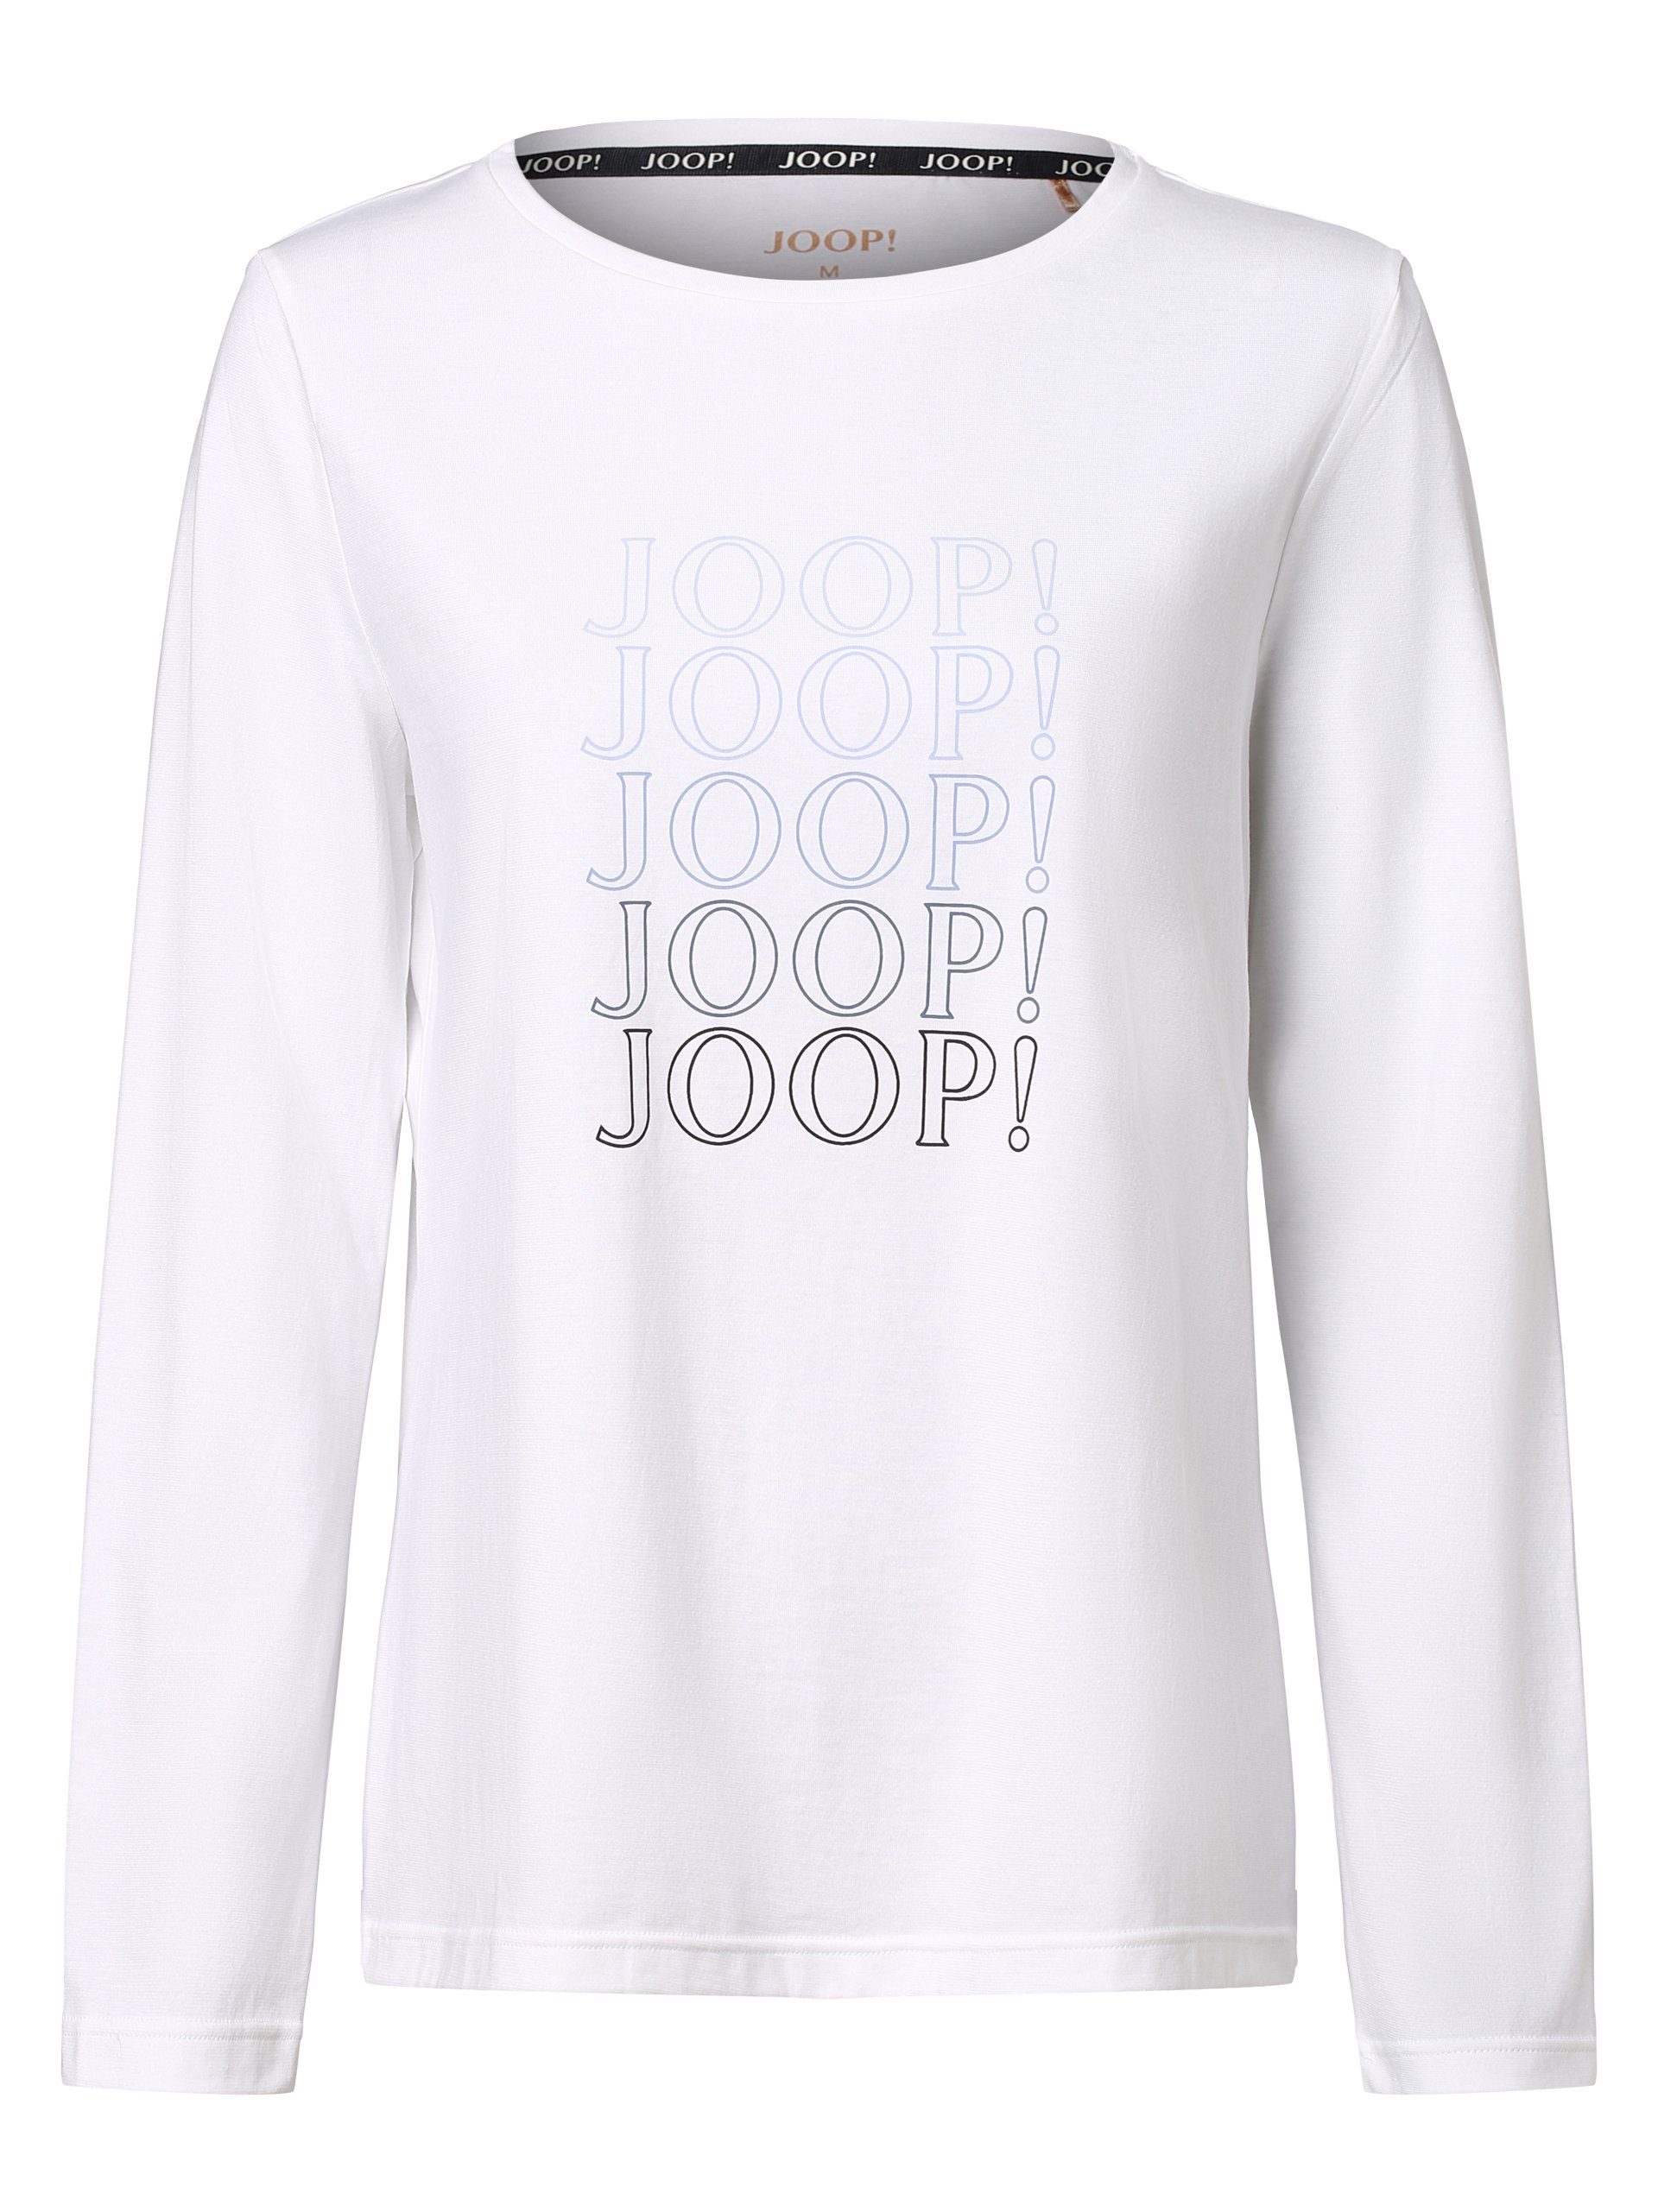 Joop! Loungeanzug print white / 032 blue